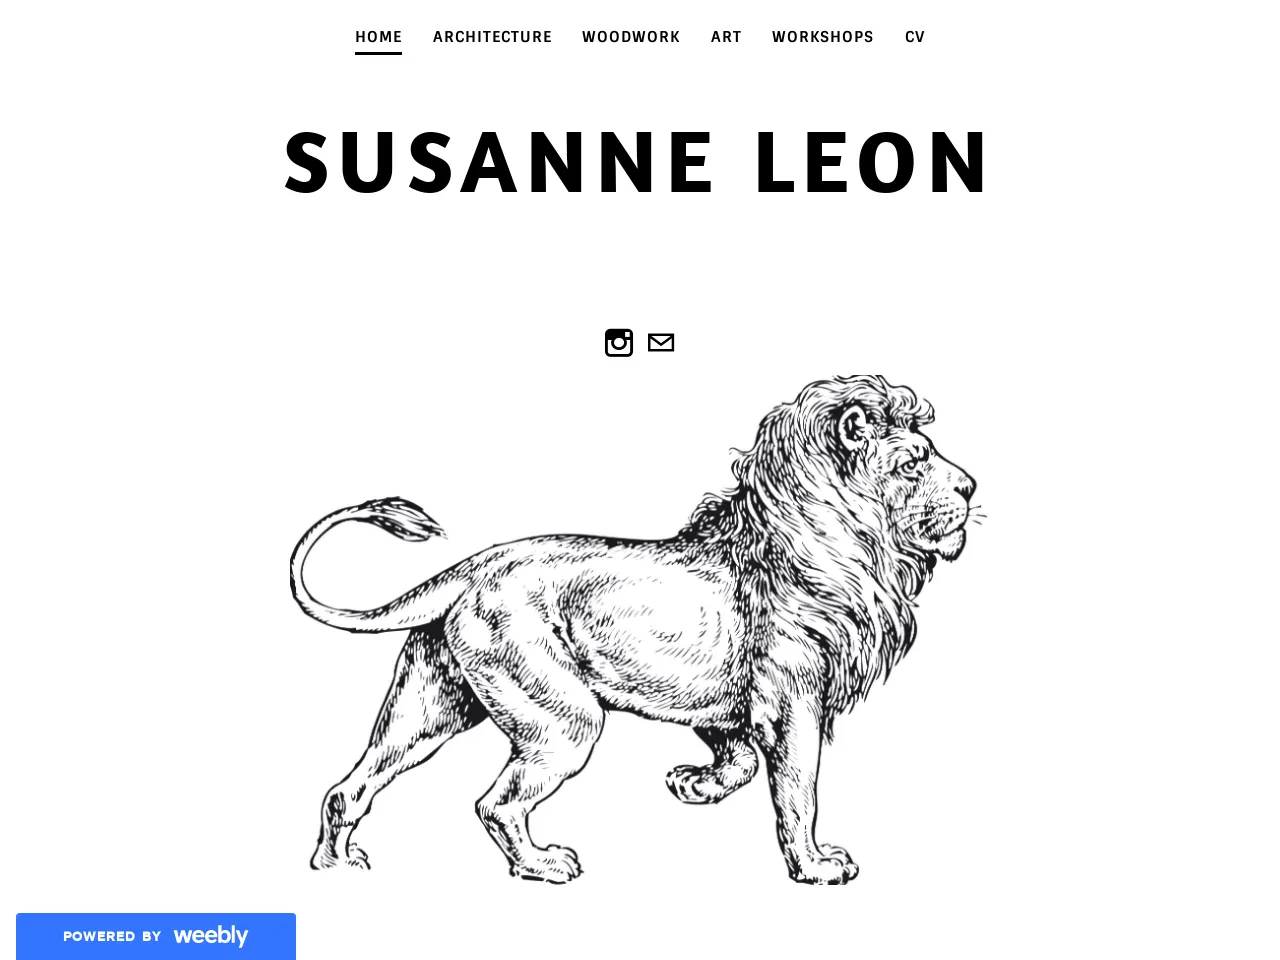 Website of concrete sculptor Susanne Leon